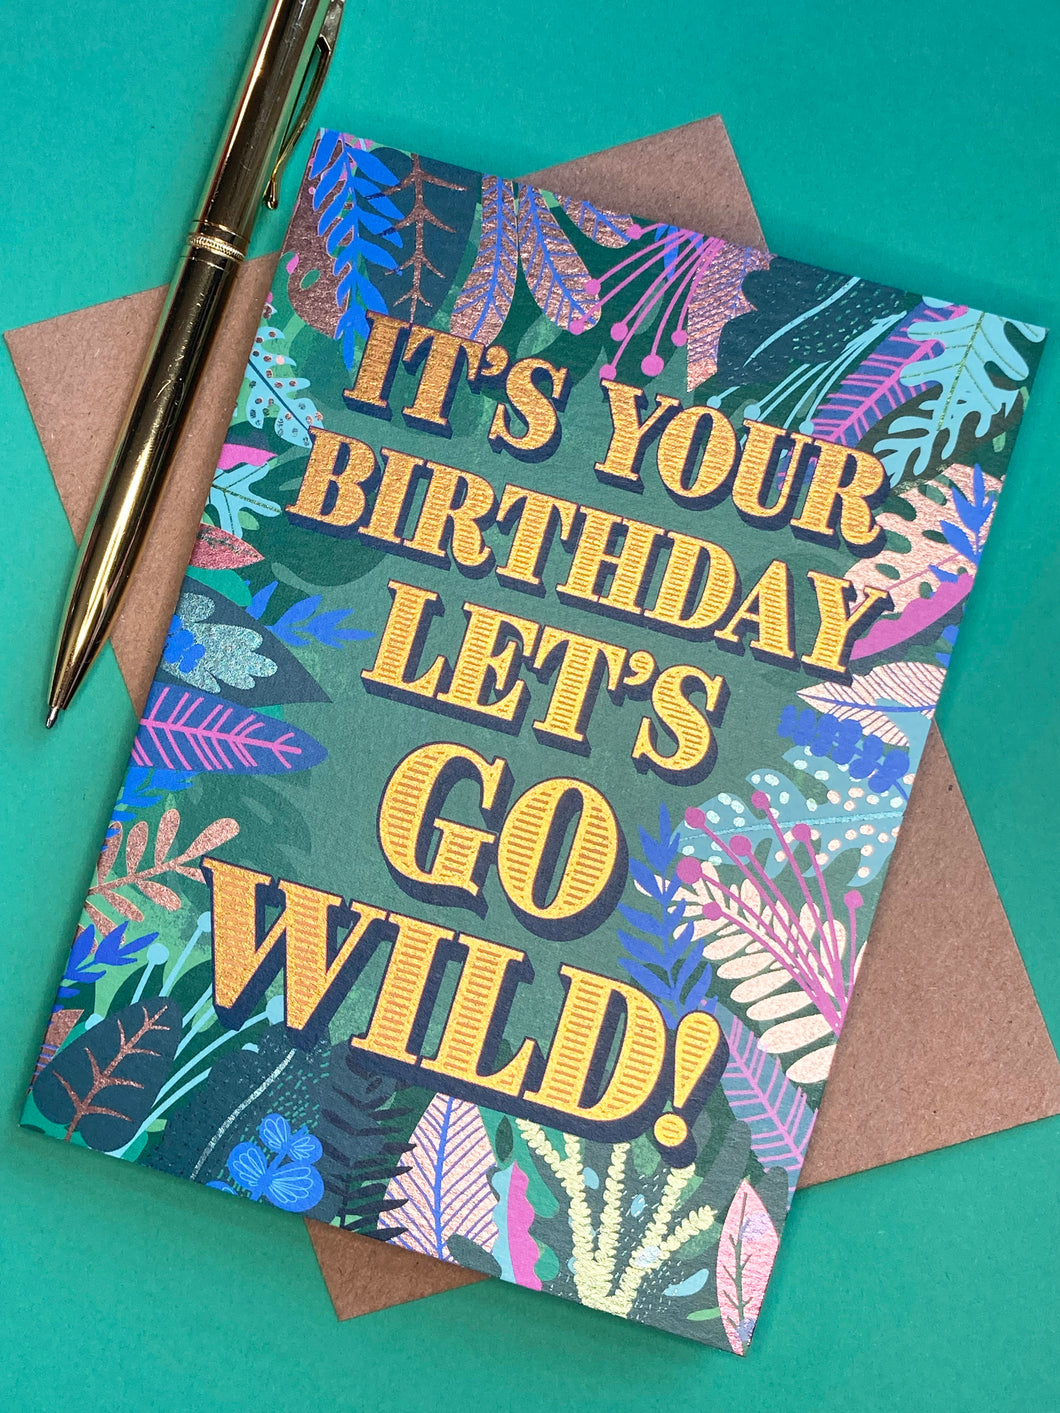 Let's Go Wild! Card